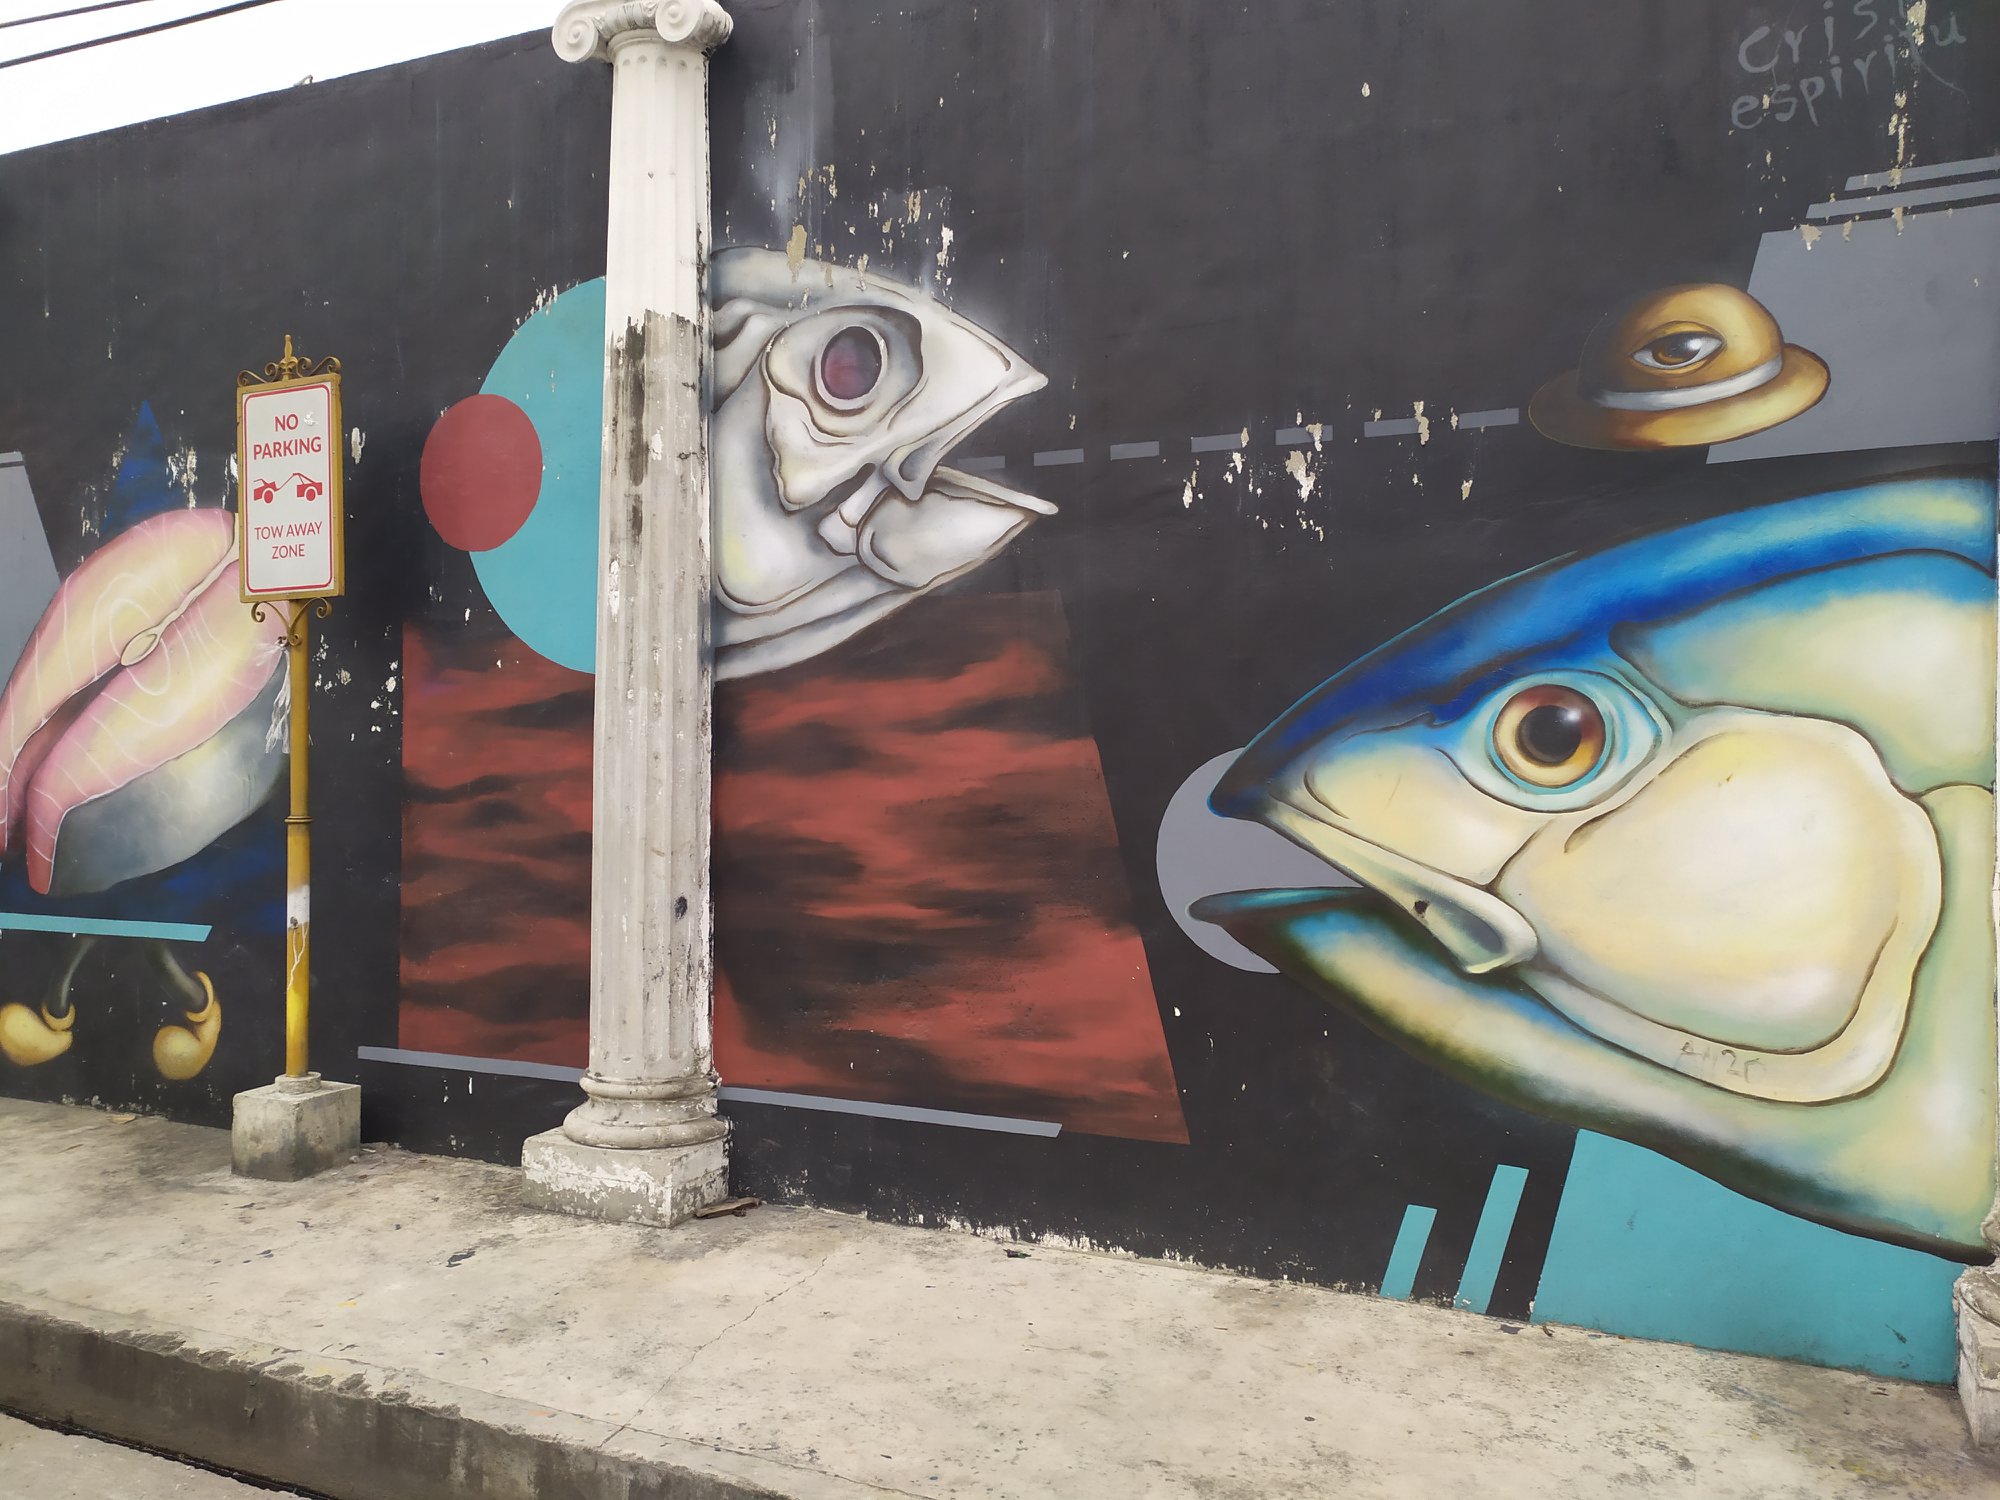 Manila street art